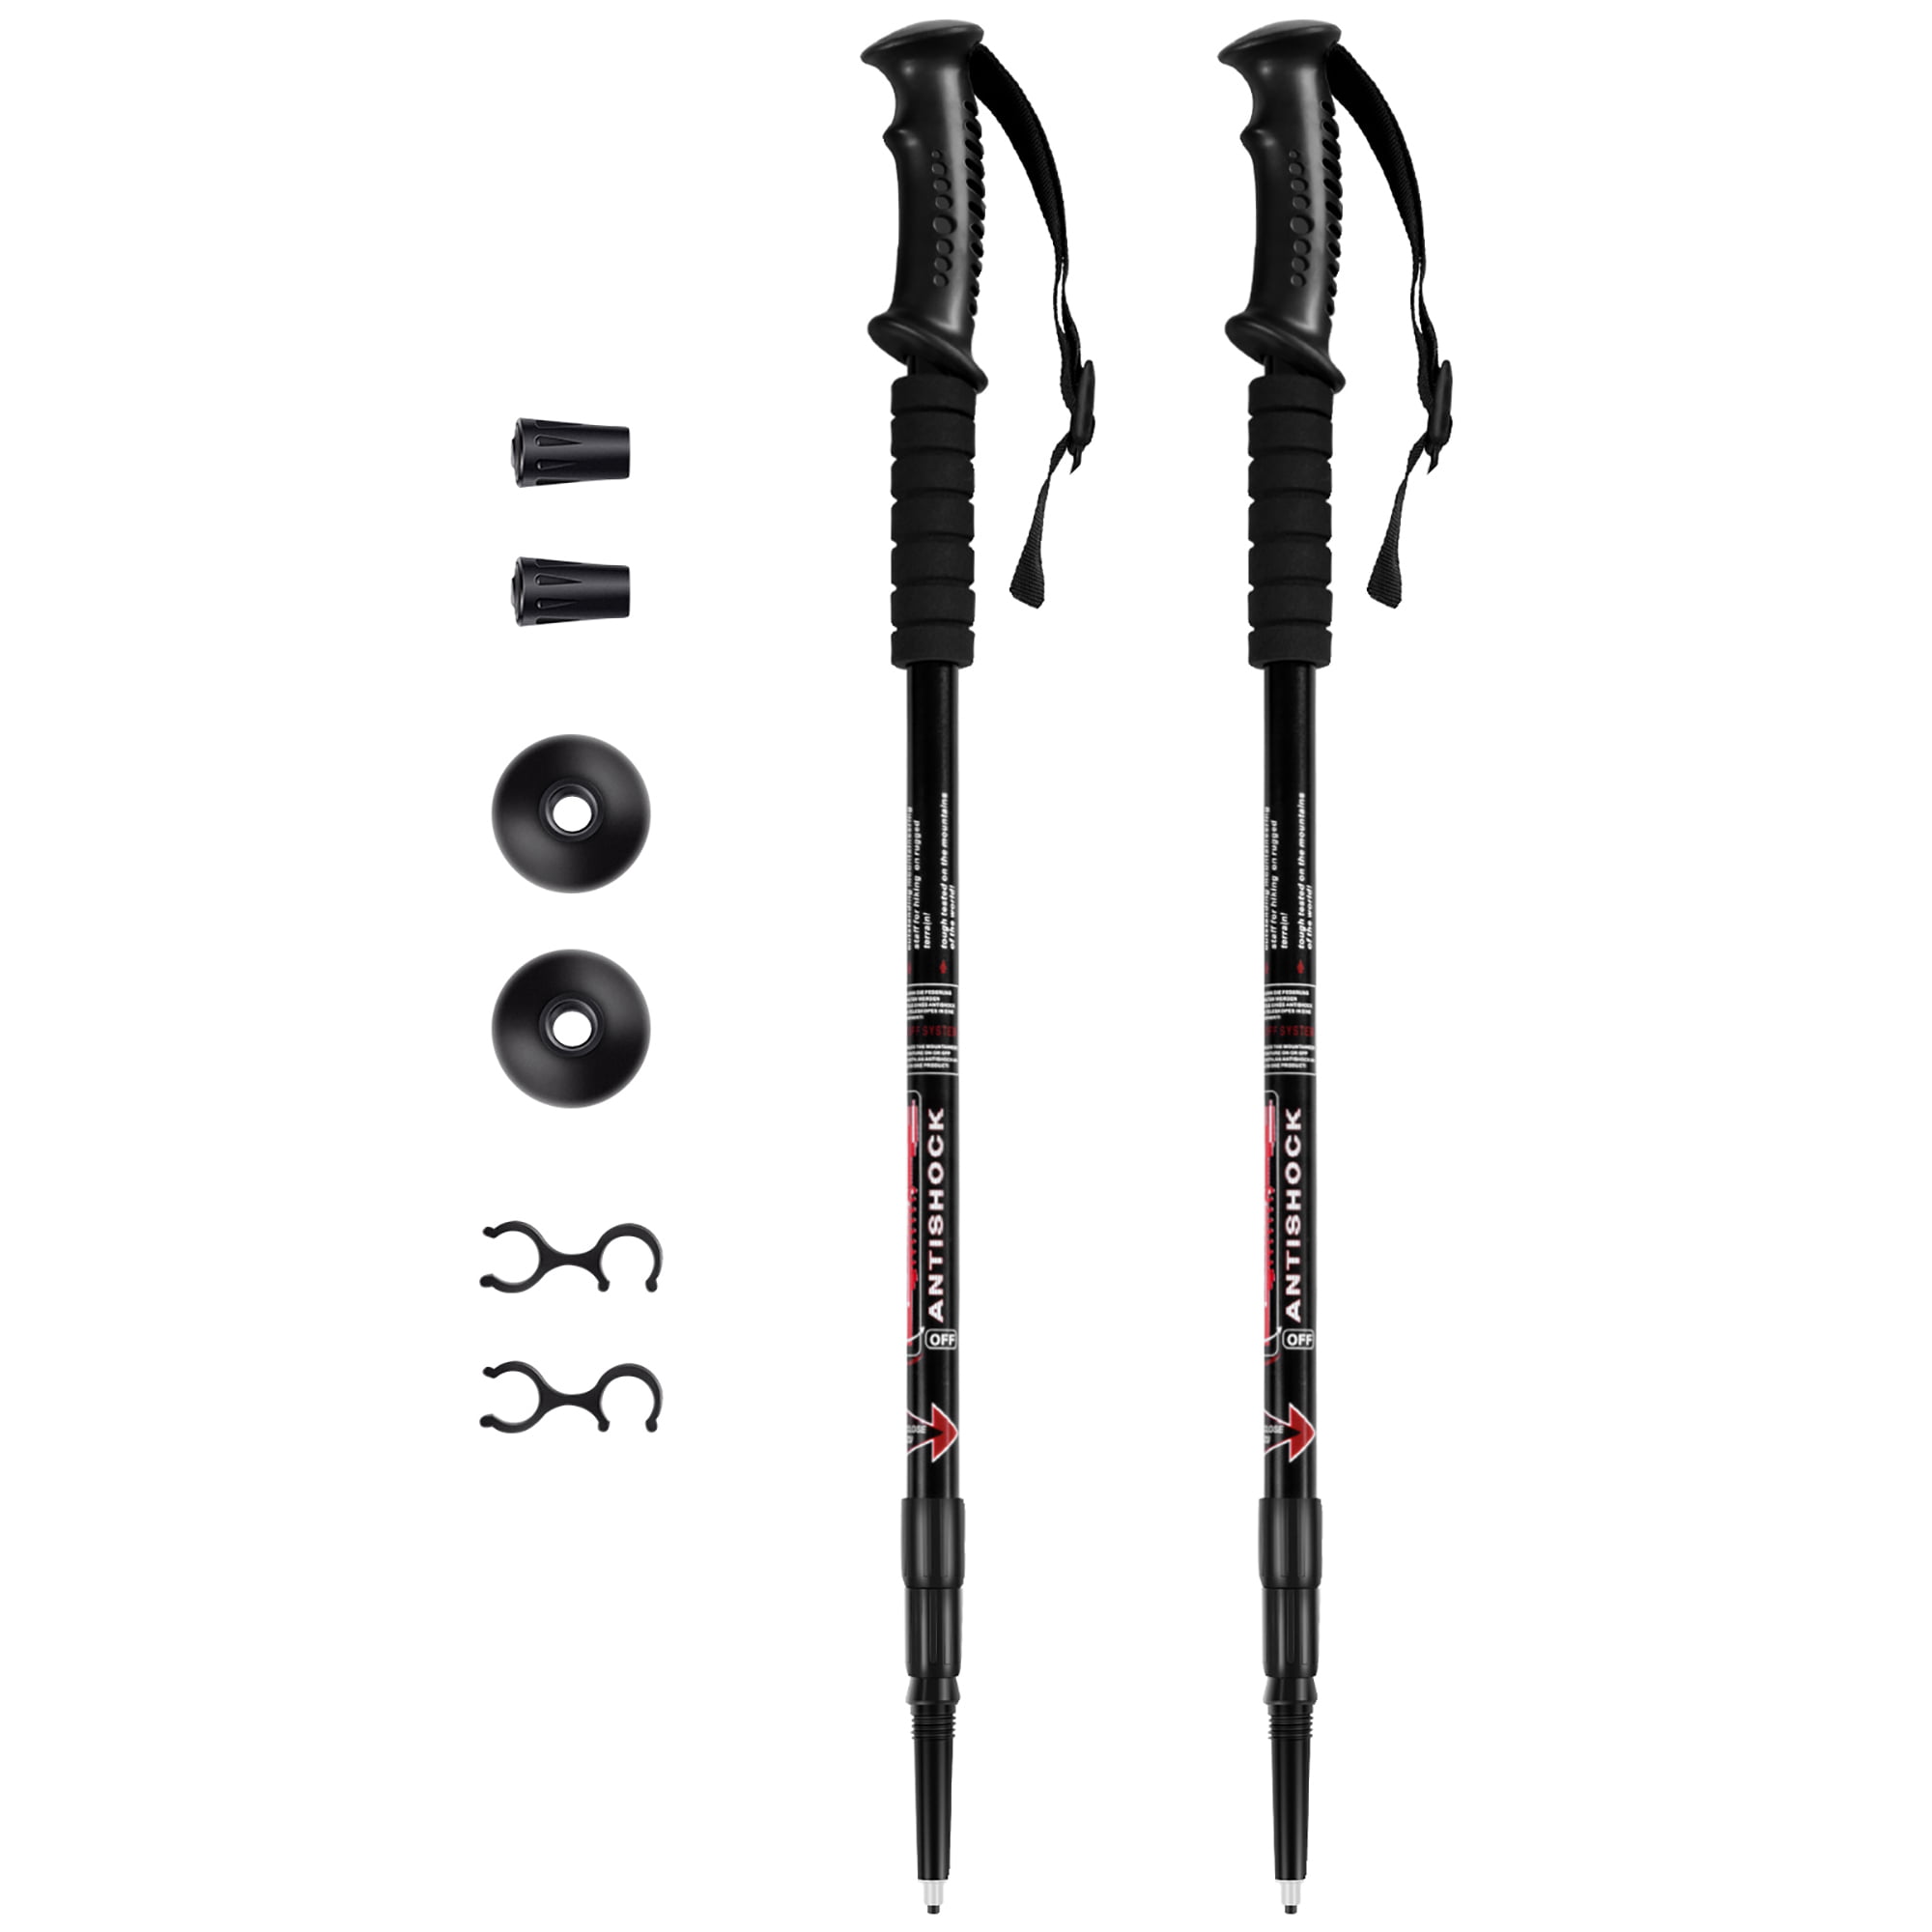 Details about   Trekking Walking Hiking Sticks Poles Adjustable Alpenstock Anti-Shock Defense